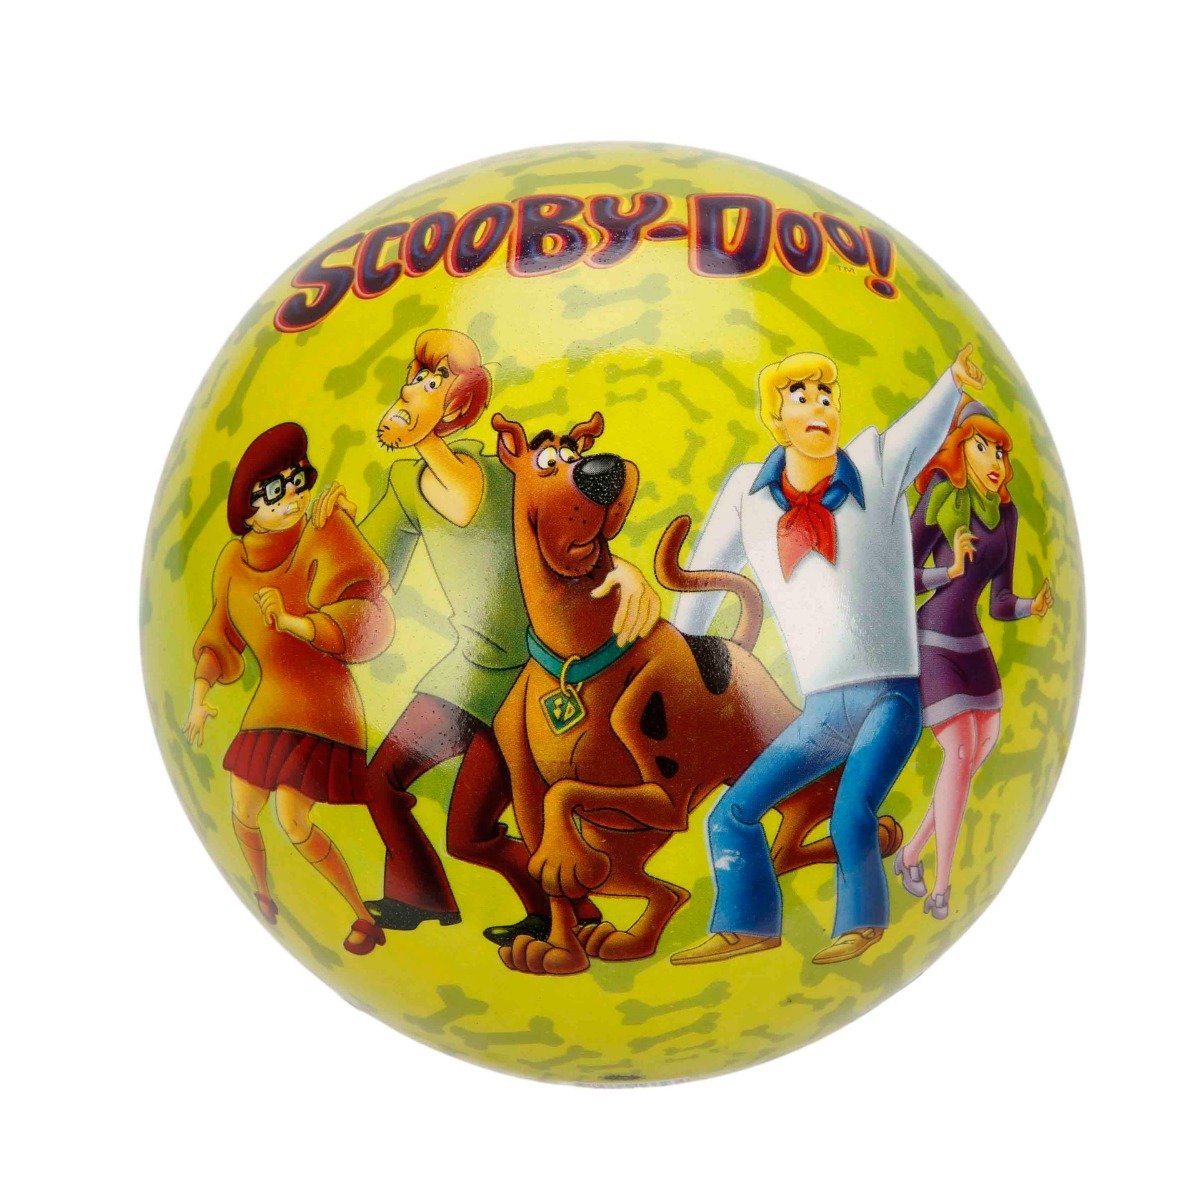 Minge PVC Dema Still, 23 cm, Scooby Doo